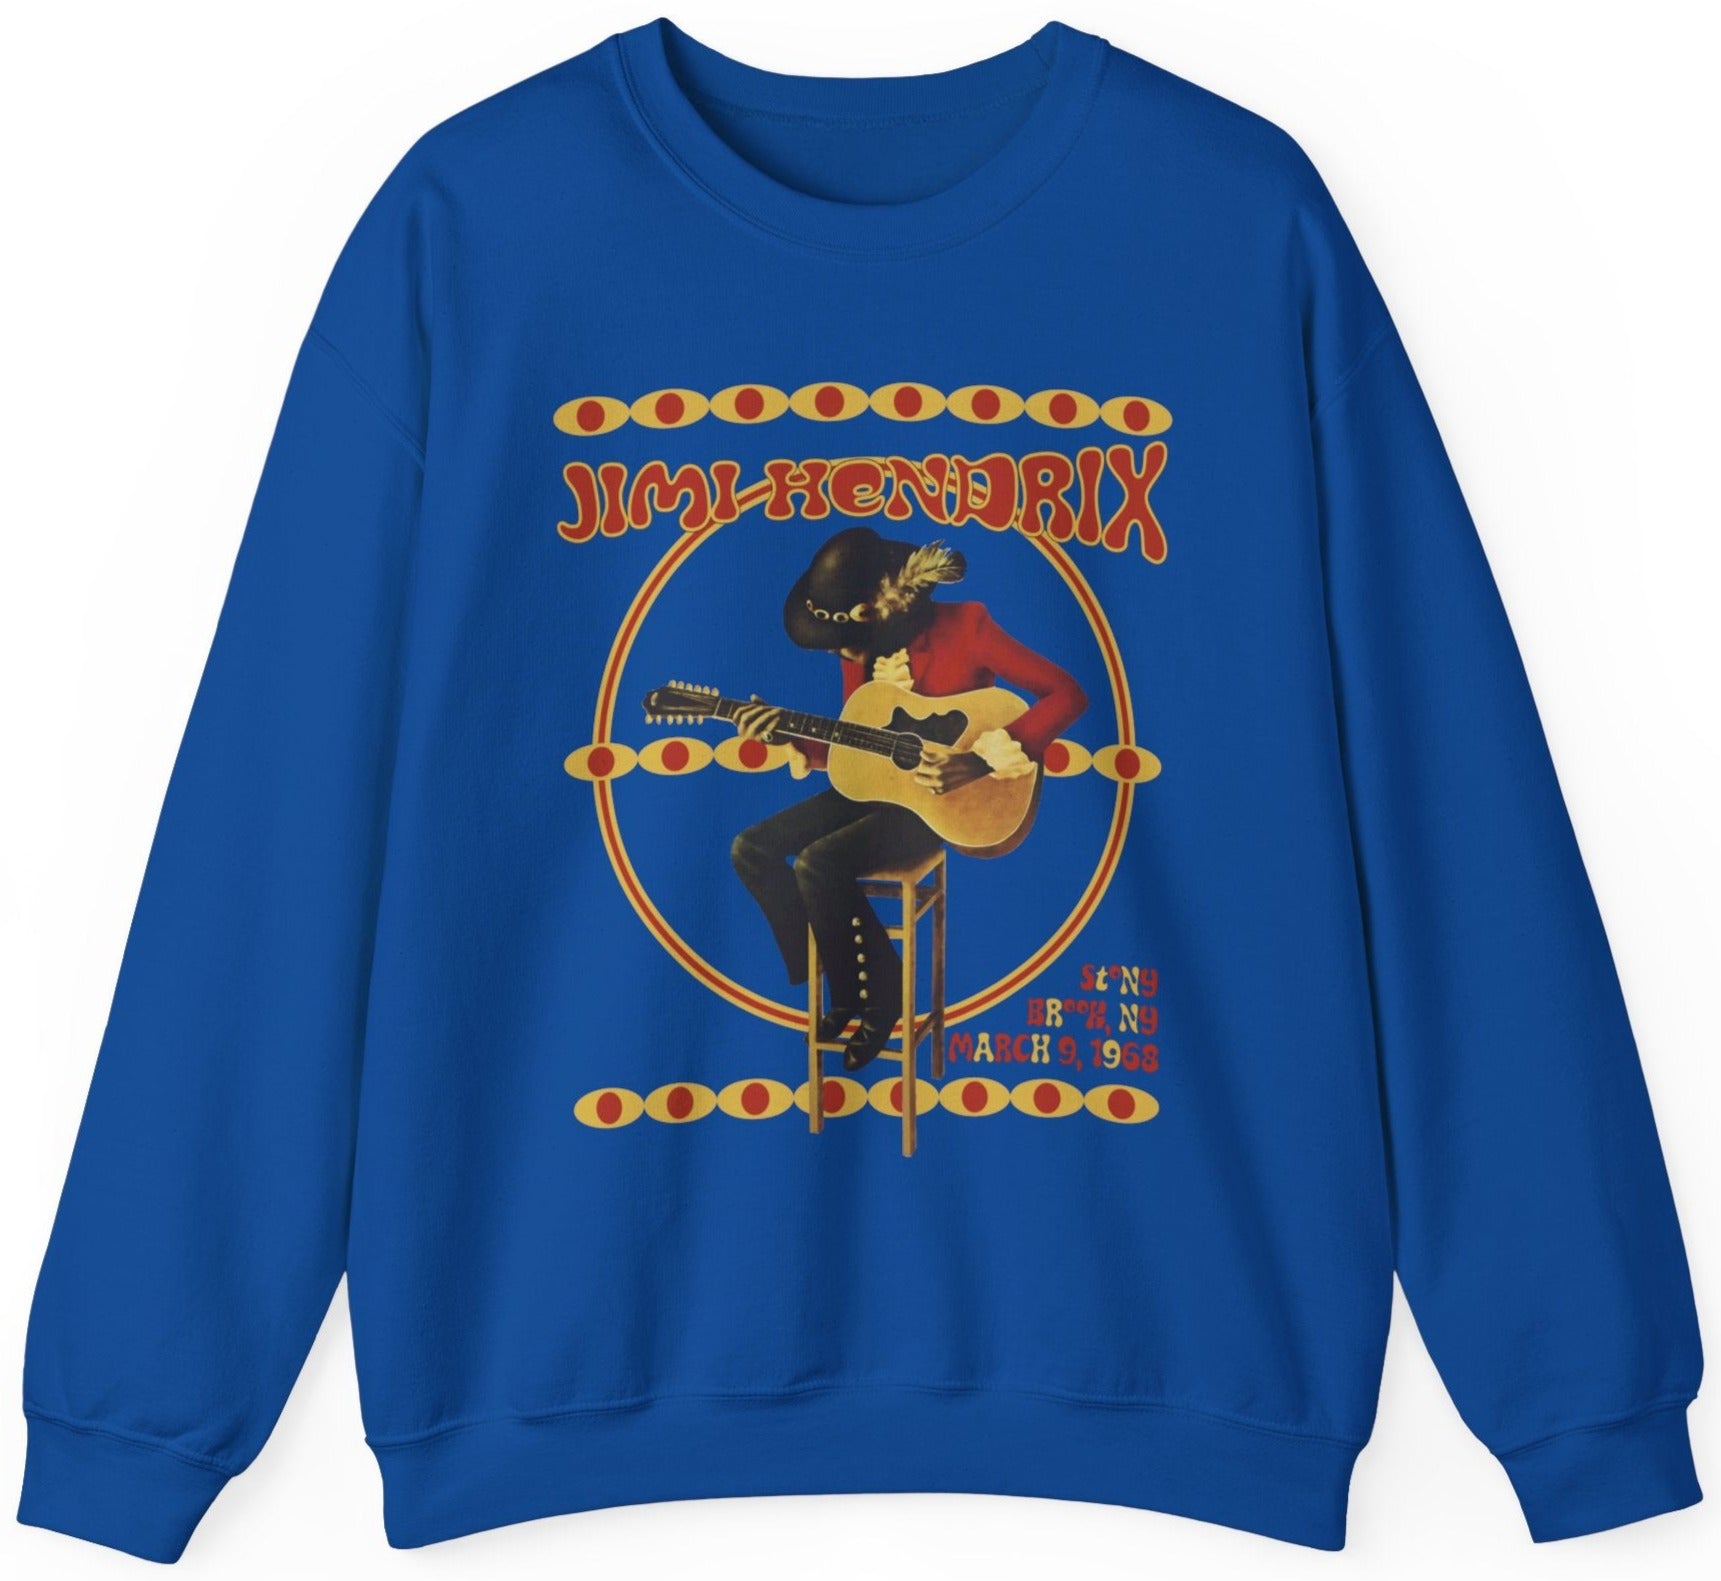 Jimi Hendrix sweatshirt